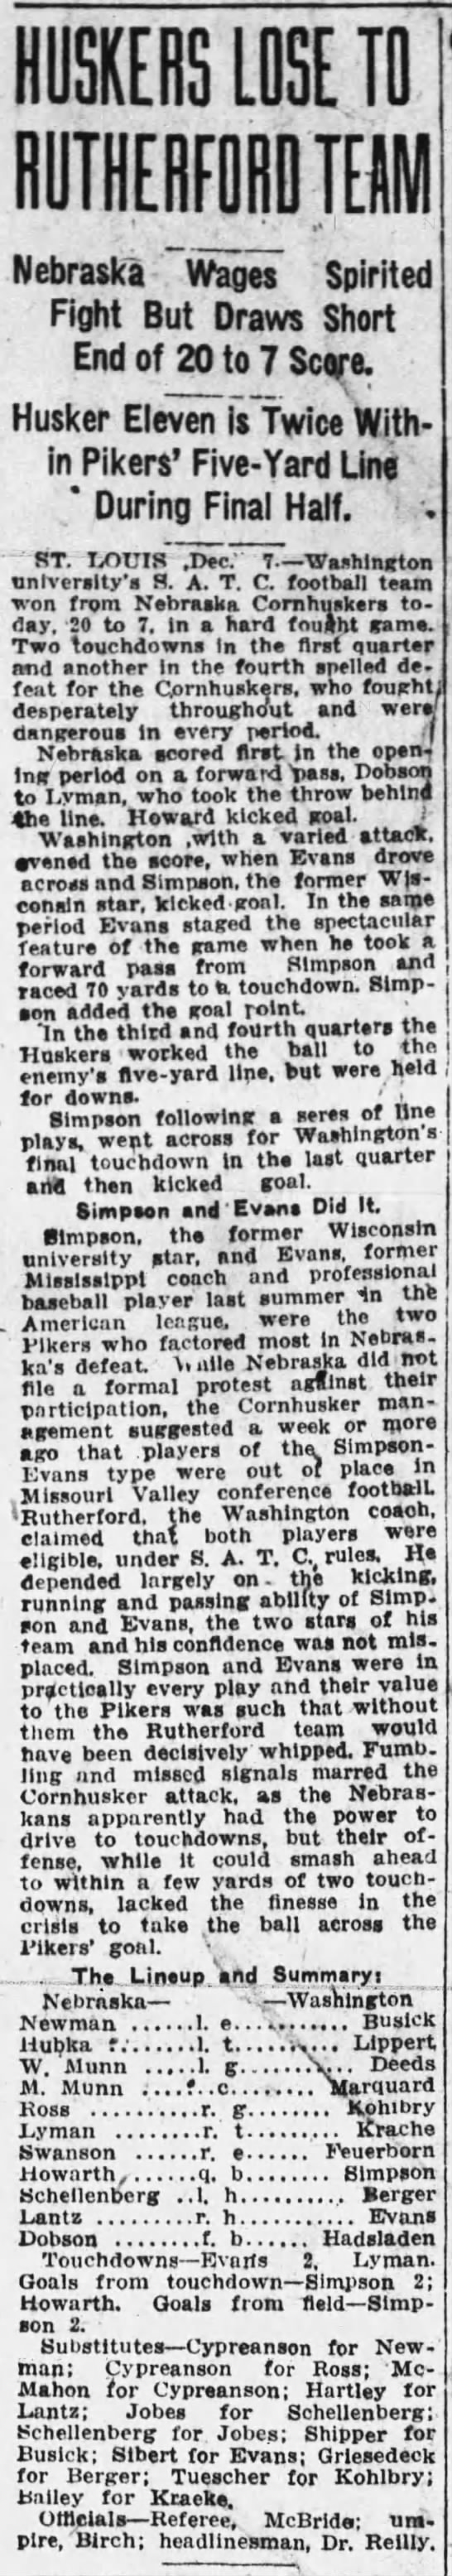 1918 Nebraska at Washington St. Louis football, Lincoln Star - 